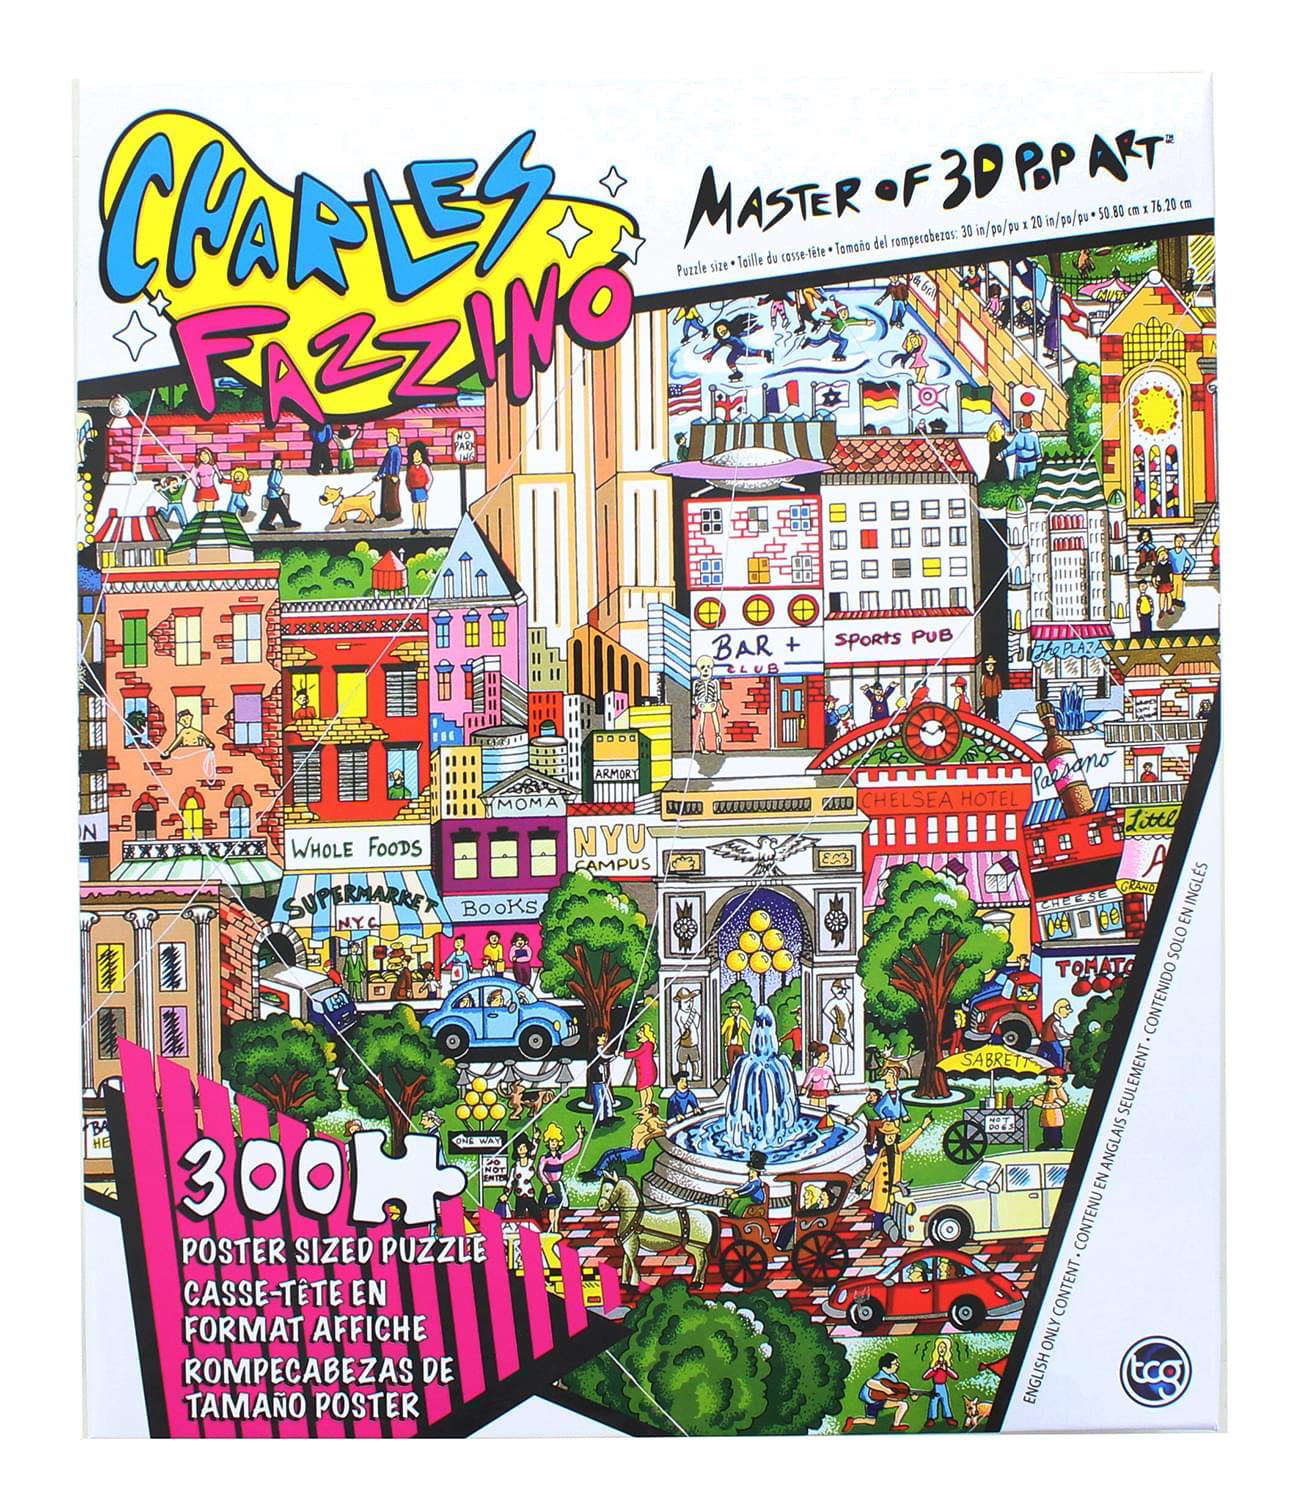 Charles Fazzino Pop Art New York City 300 Piece Poster Sized Jigsaw Puzzle